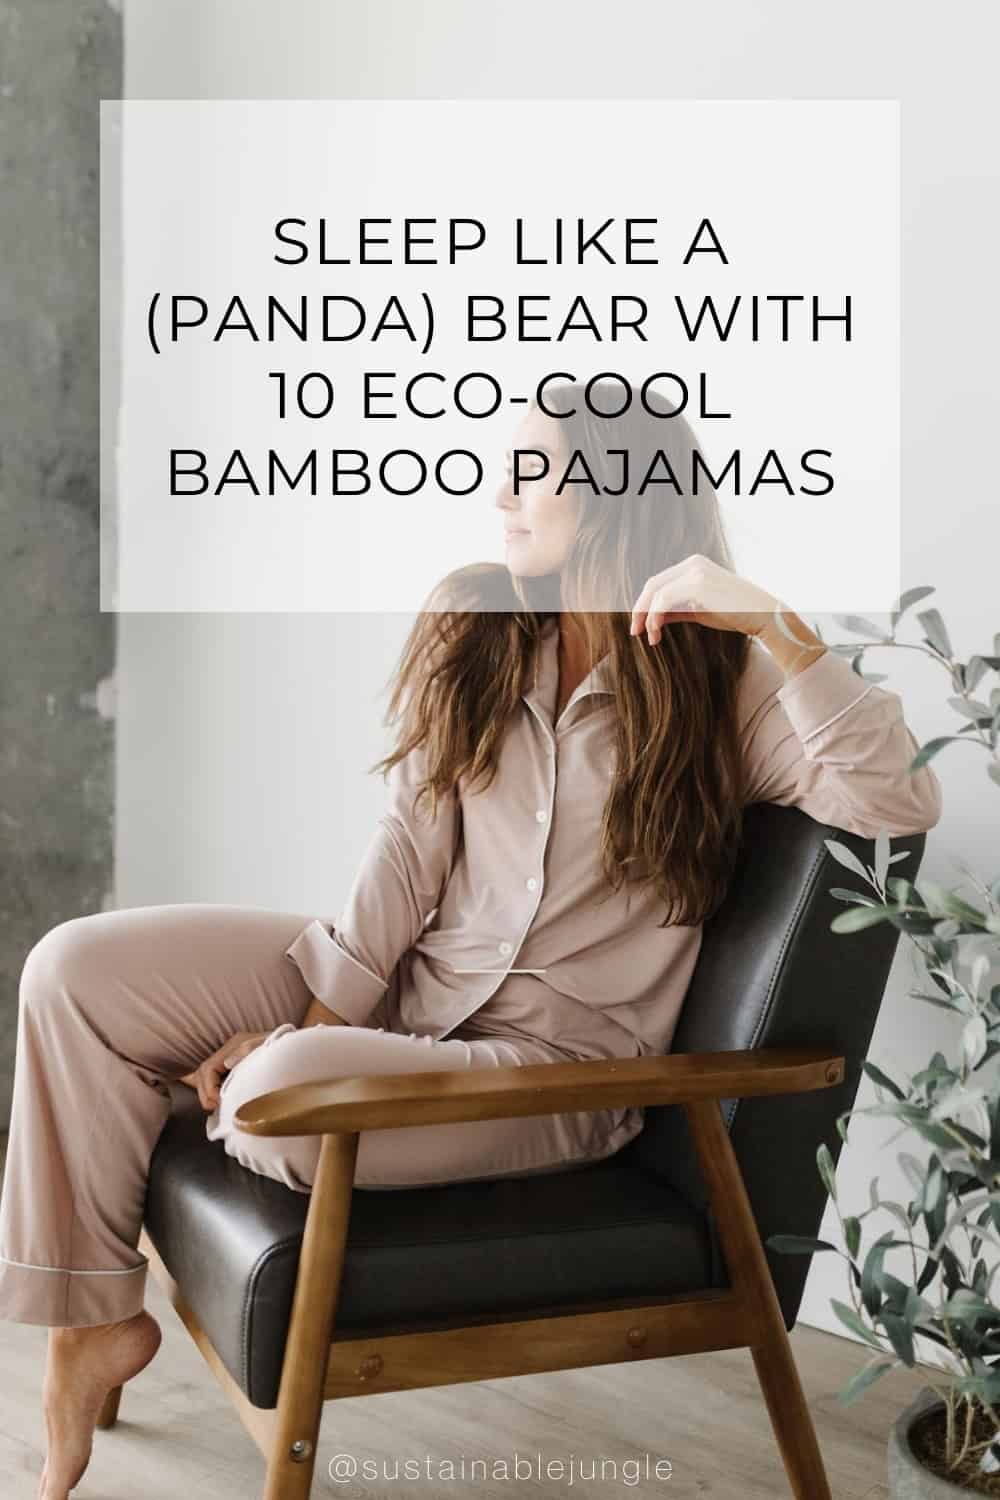 Sleep Like A (Panda) Bear With 10 Eco-Cool Bamboo Pajamas #bamboopajamas #womensbamboopajamas #bestbabybamboopajamas #organicbamboopajamas #bamboopajamasets #bamboosleepwear #sustainablejungle Image by Cozy Earth